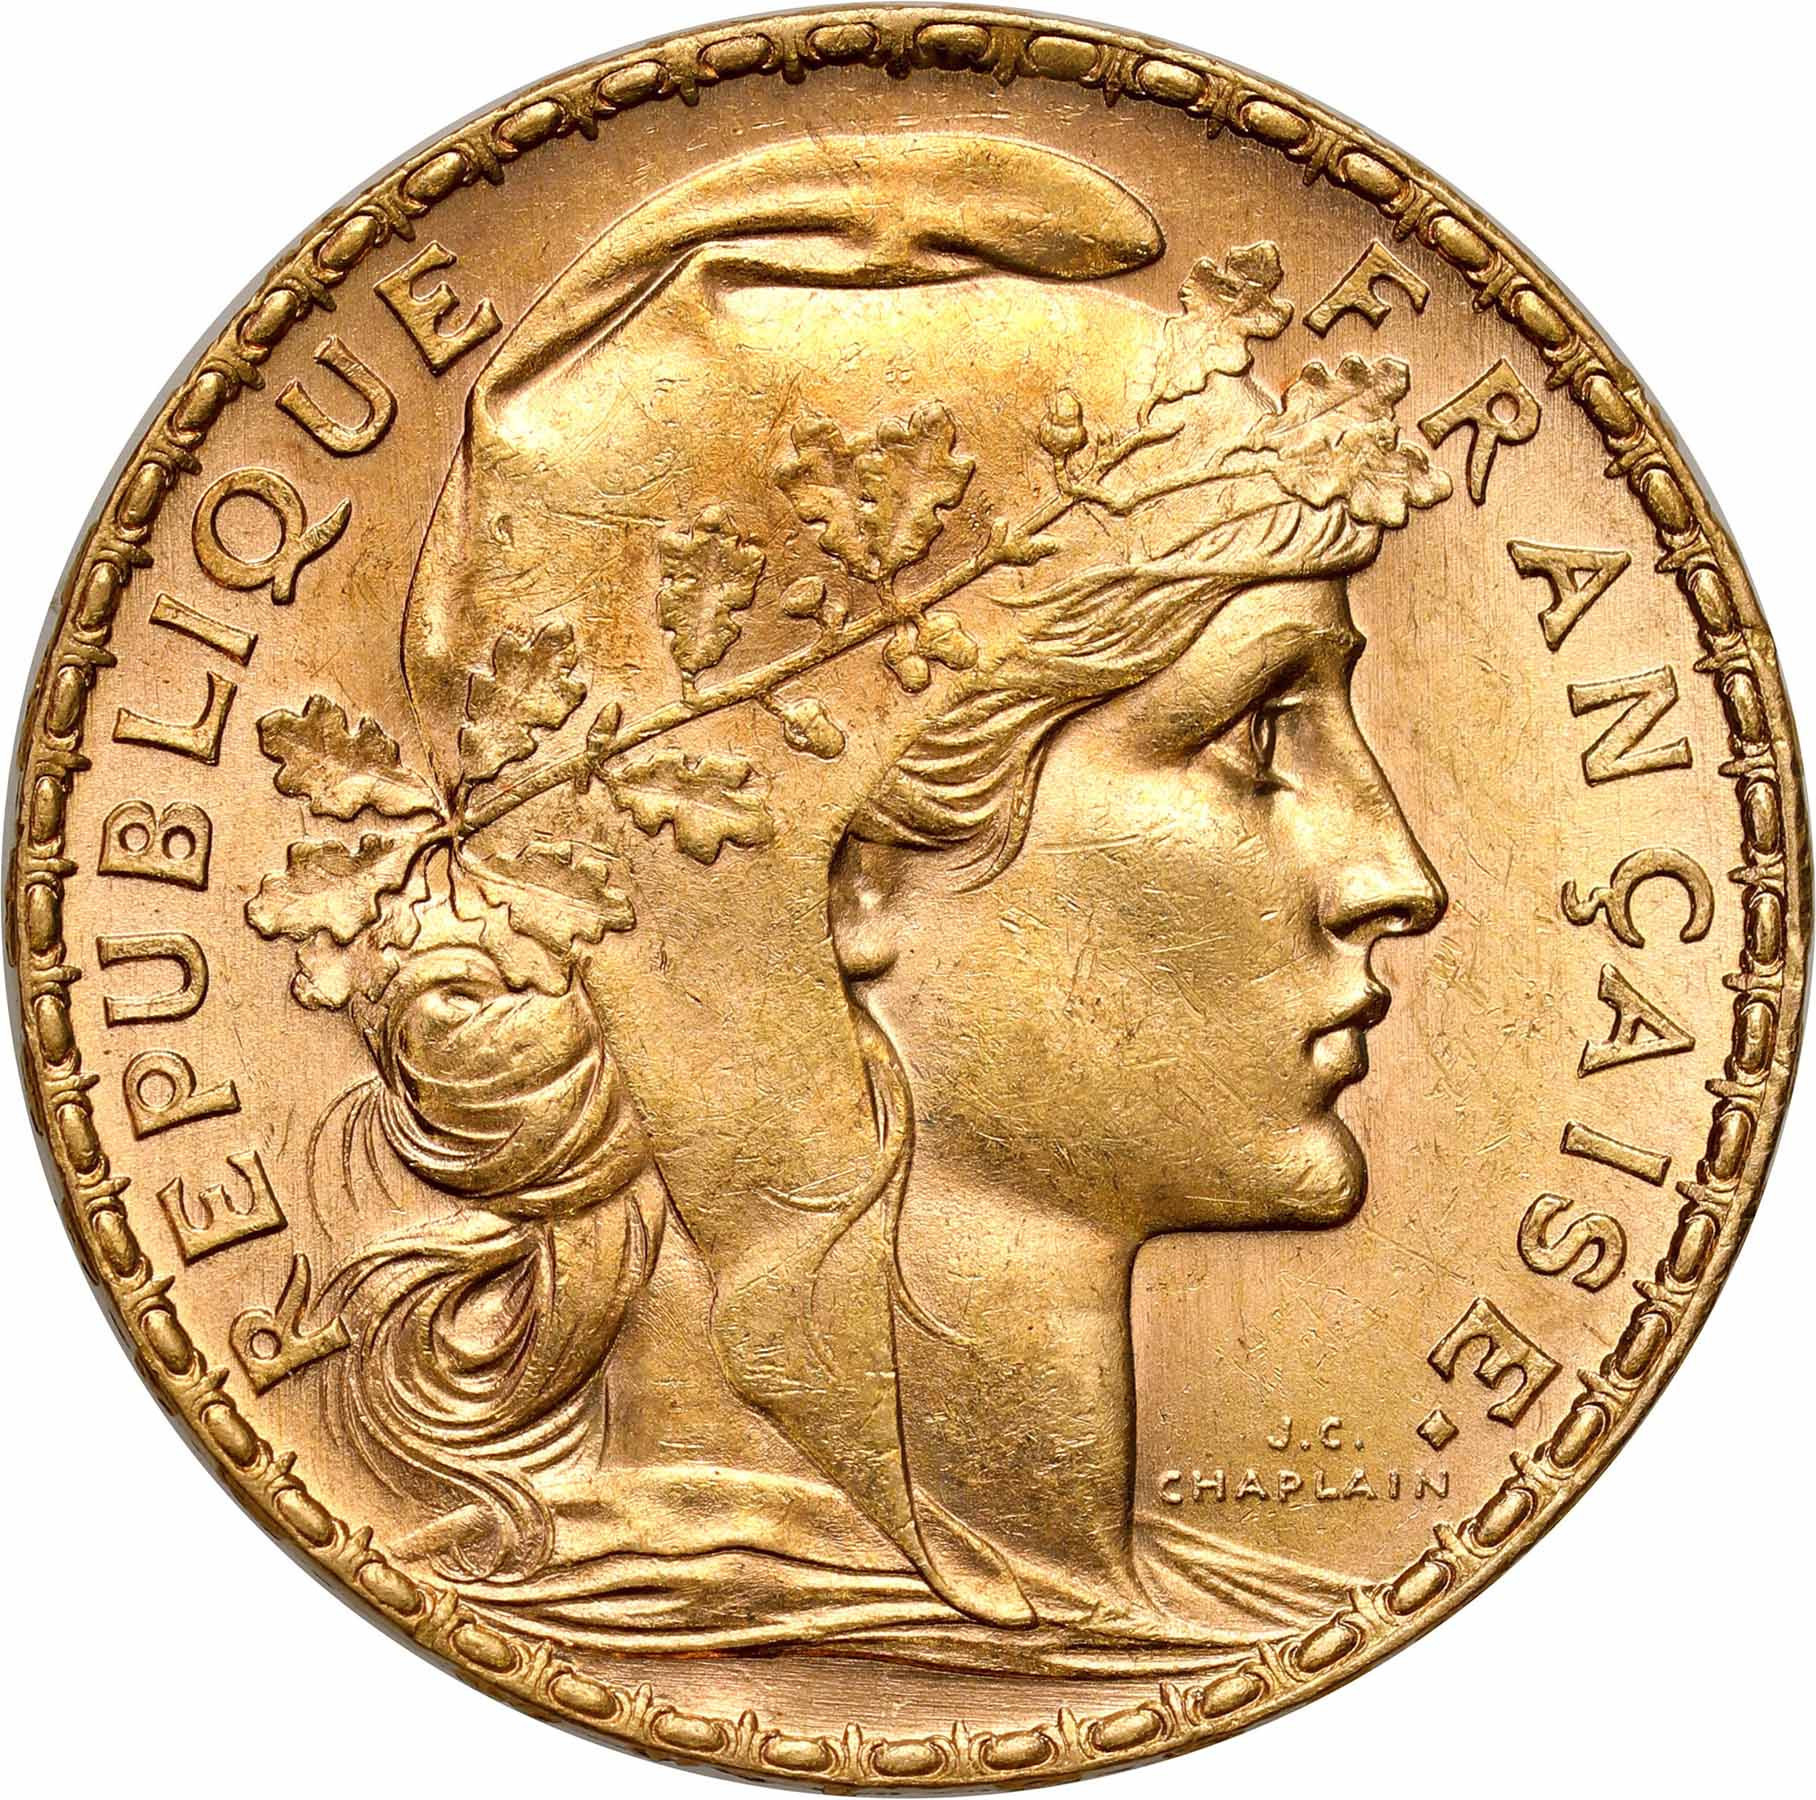 Francja. 20 franków 1912, Paryż